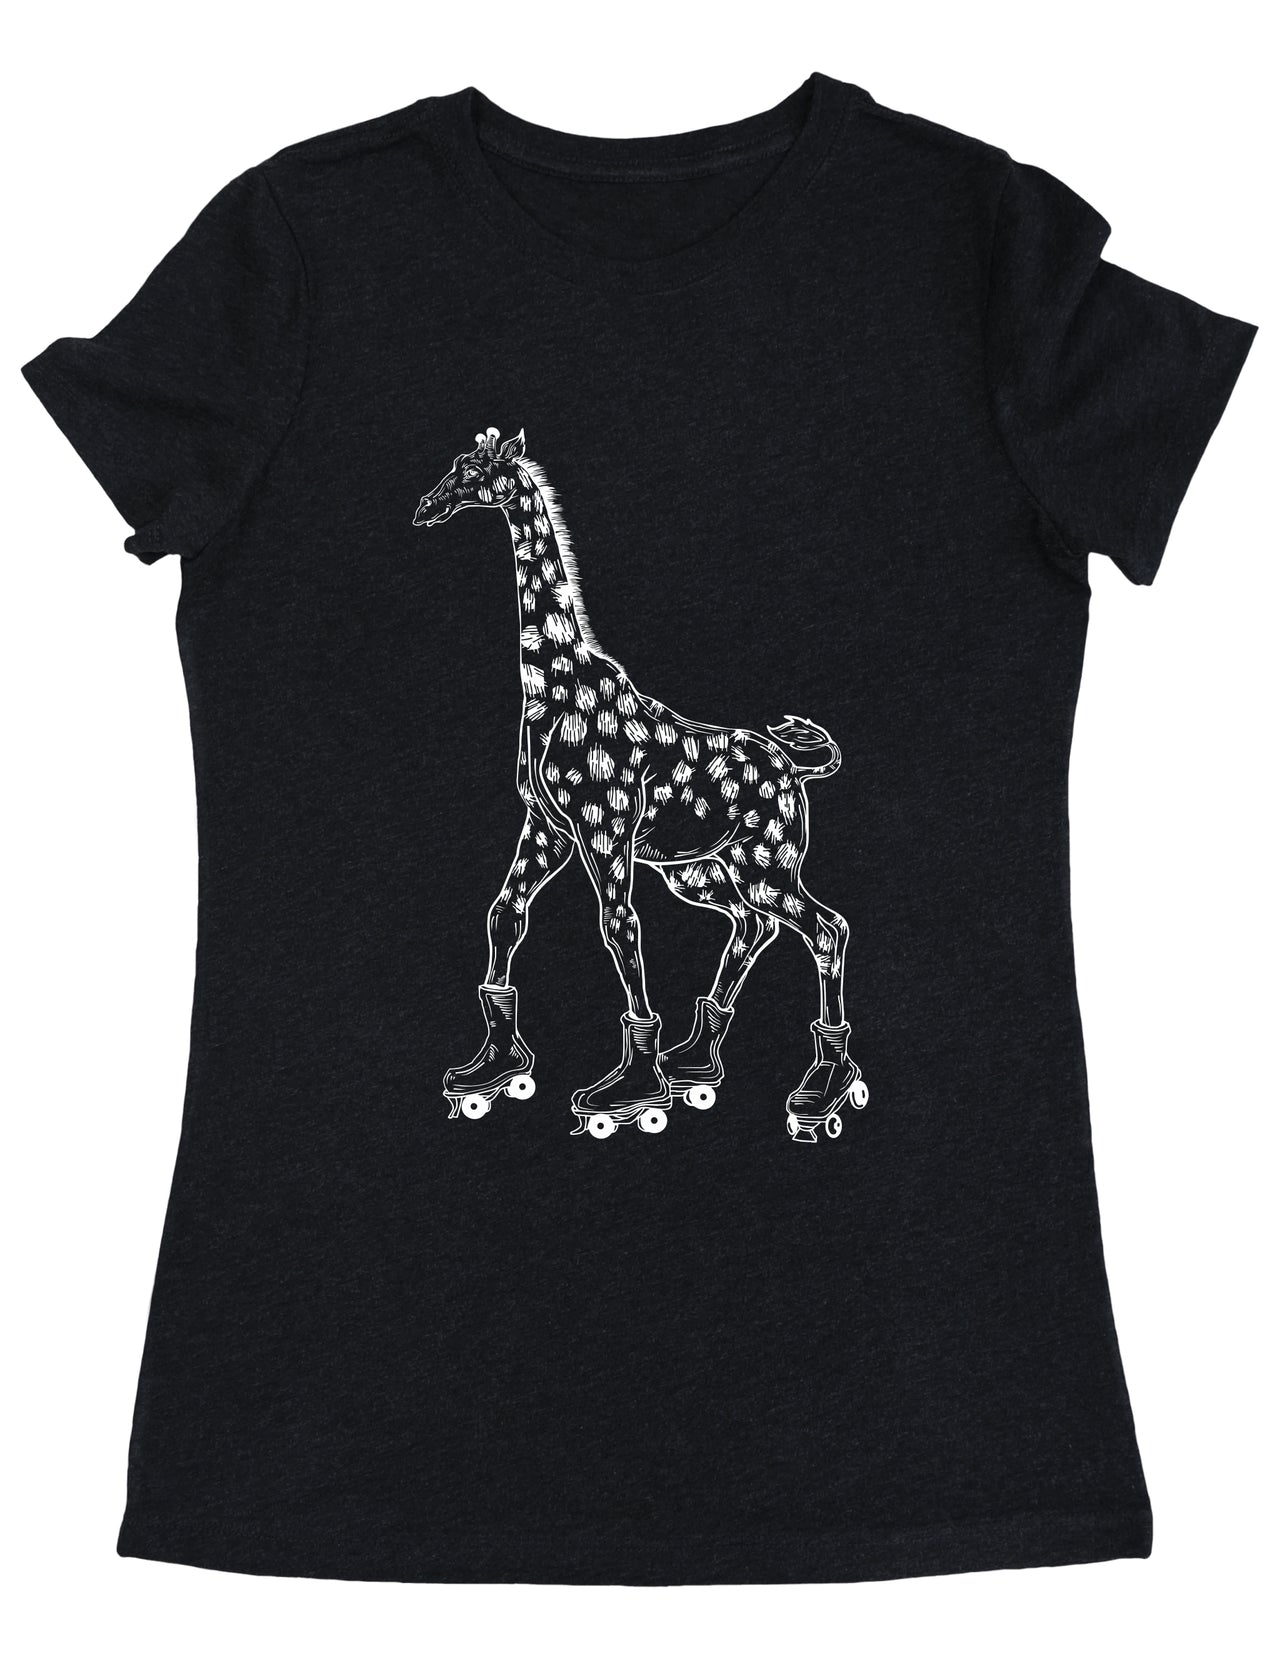 Camiseta de tejido mixto SEEMBO Giraffe Skater Patinaje divertido Patines sobre ruedas Mujer